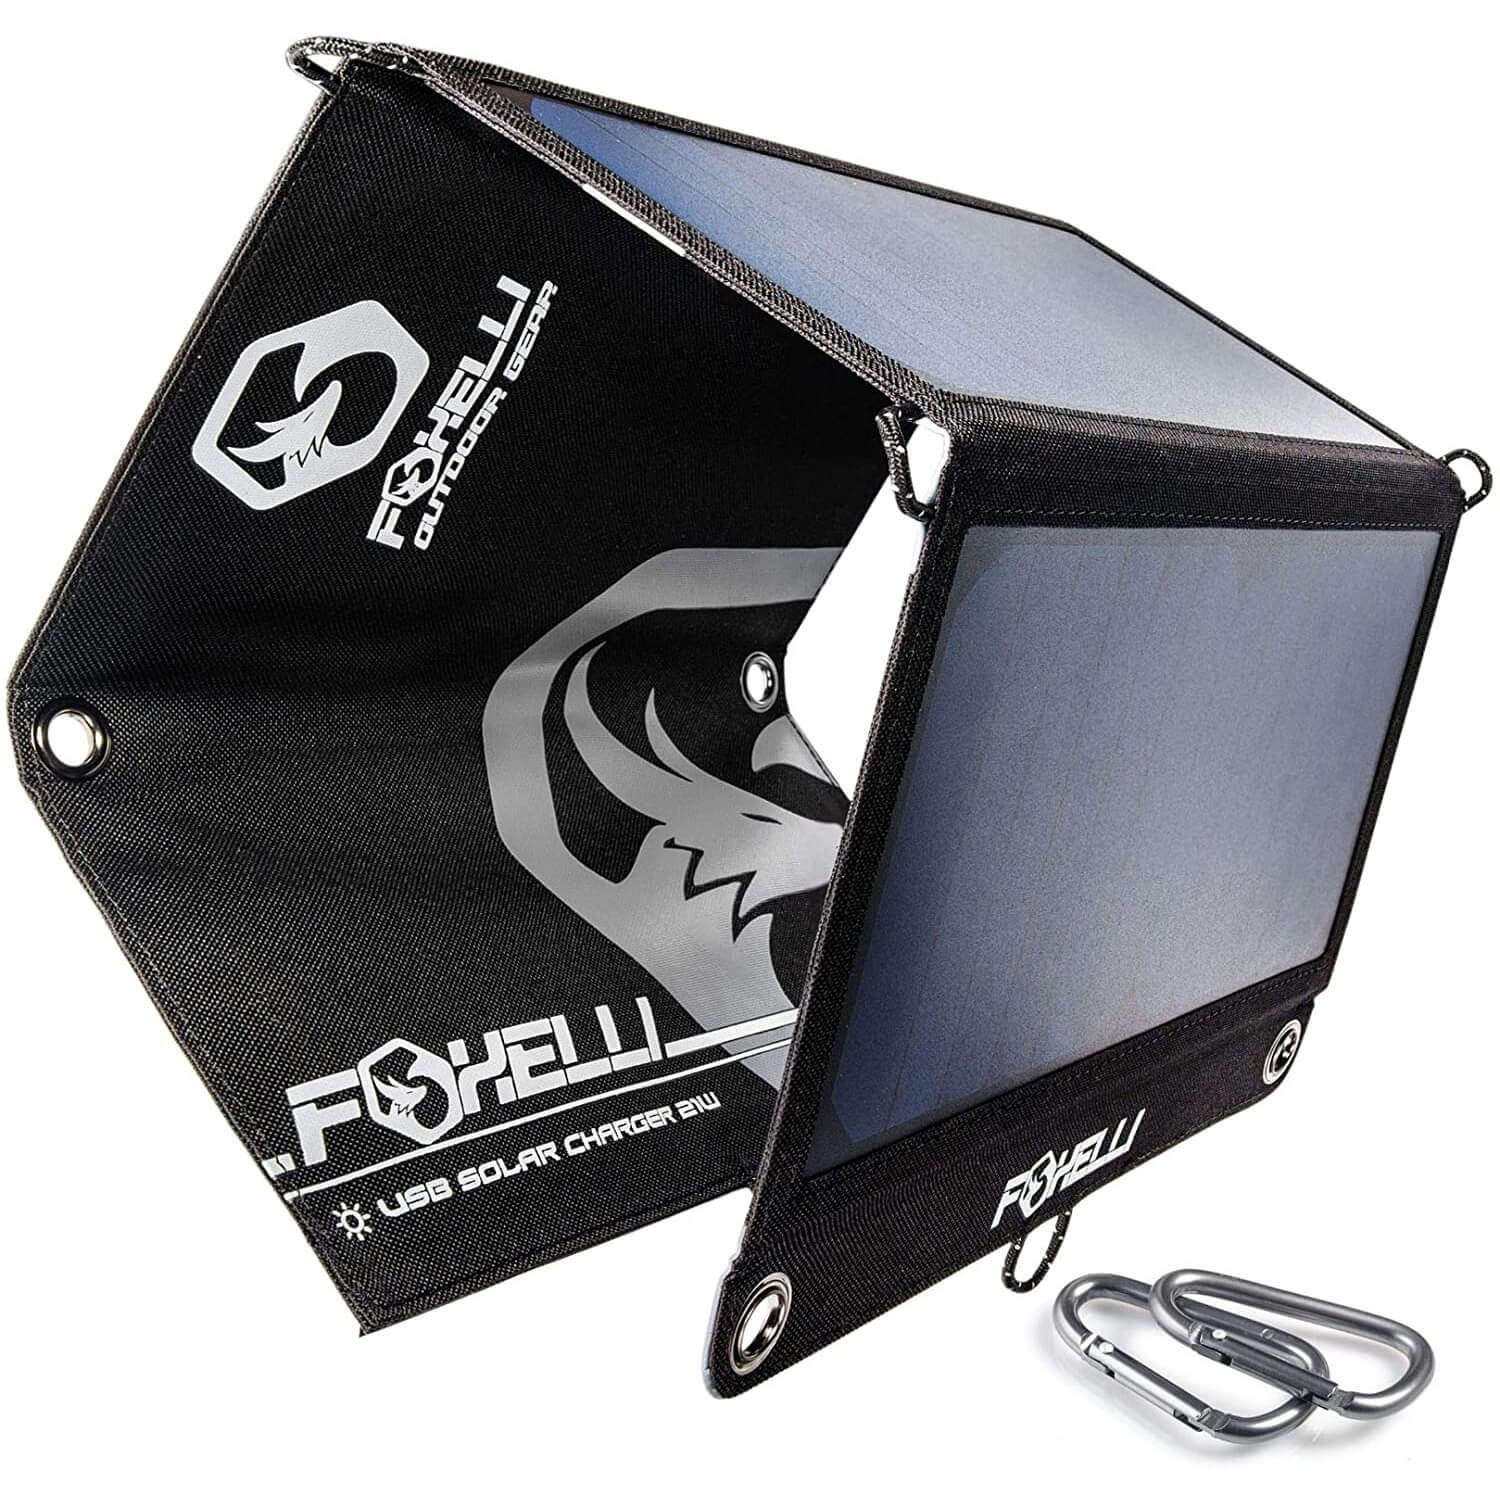 Foxelli Triple USB Solar Power Bank